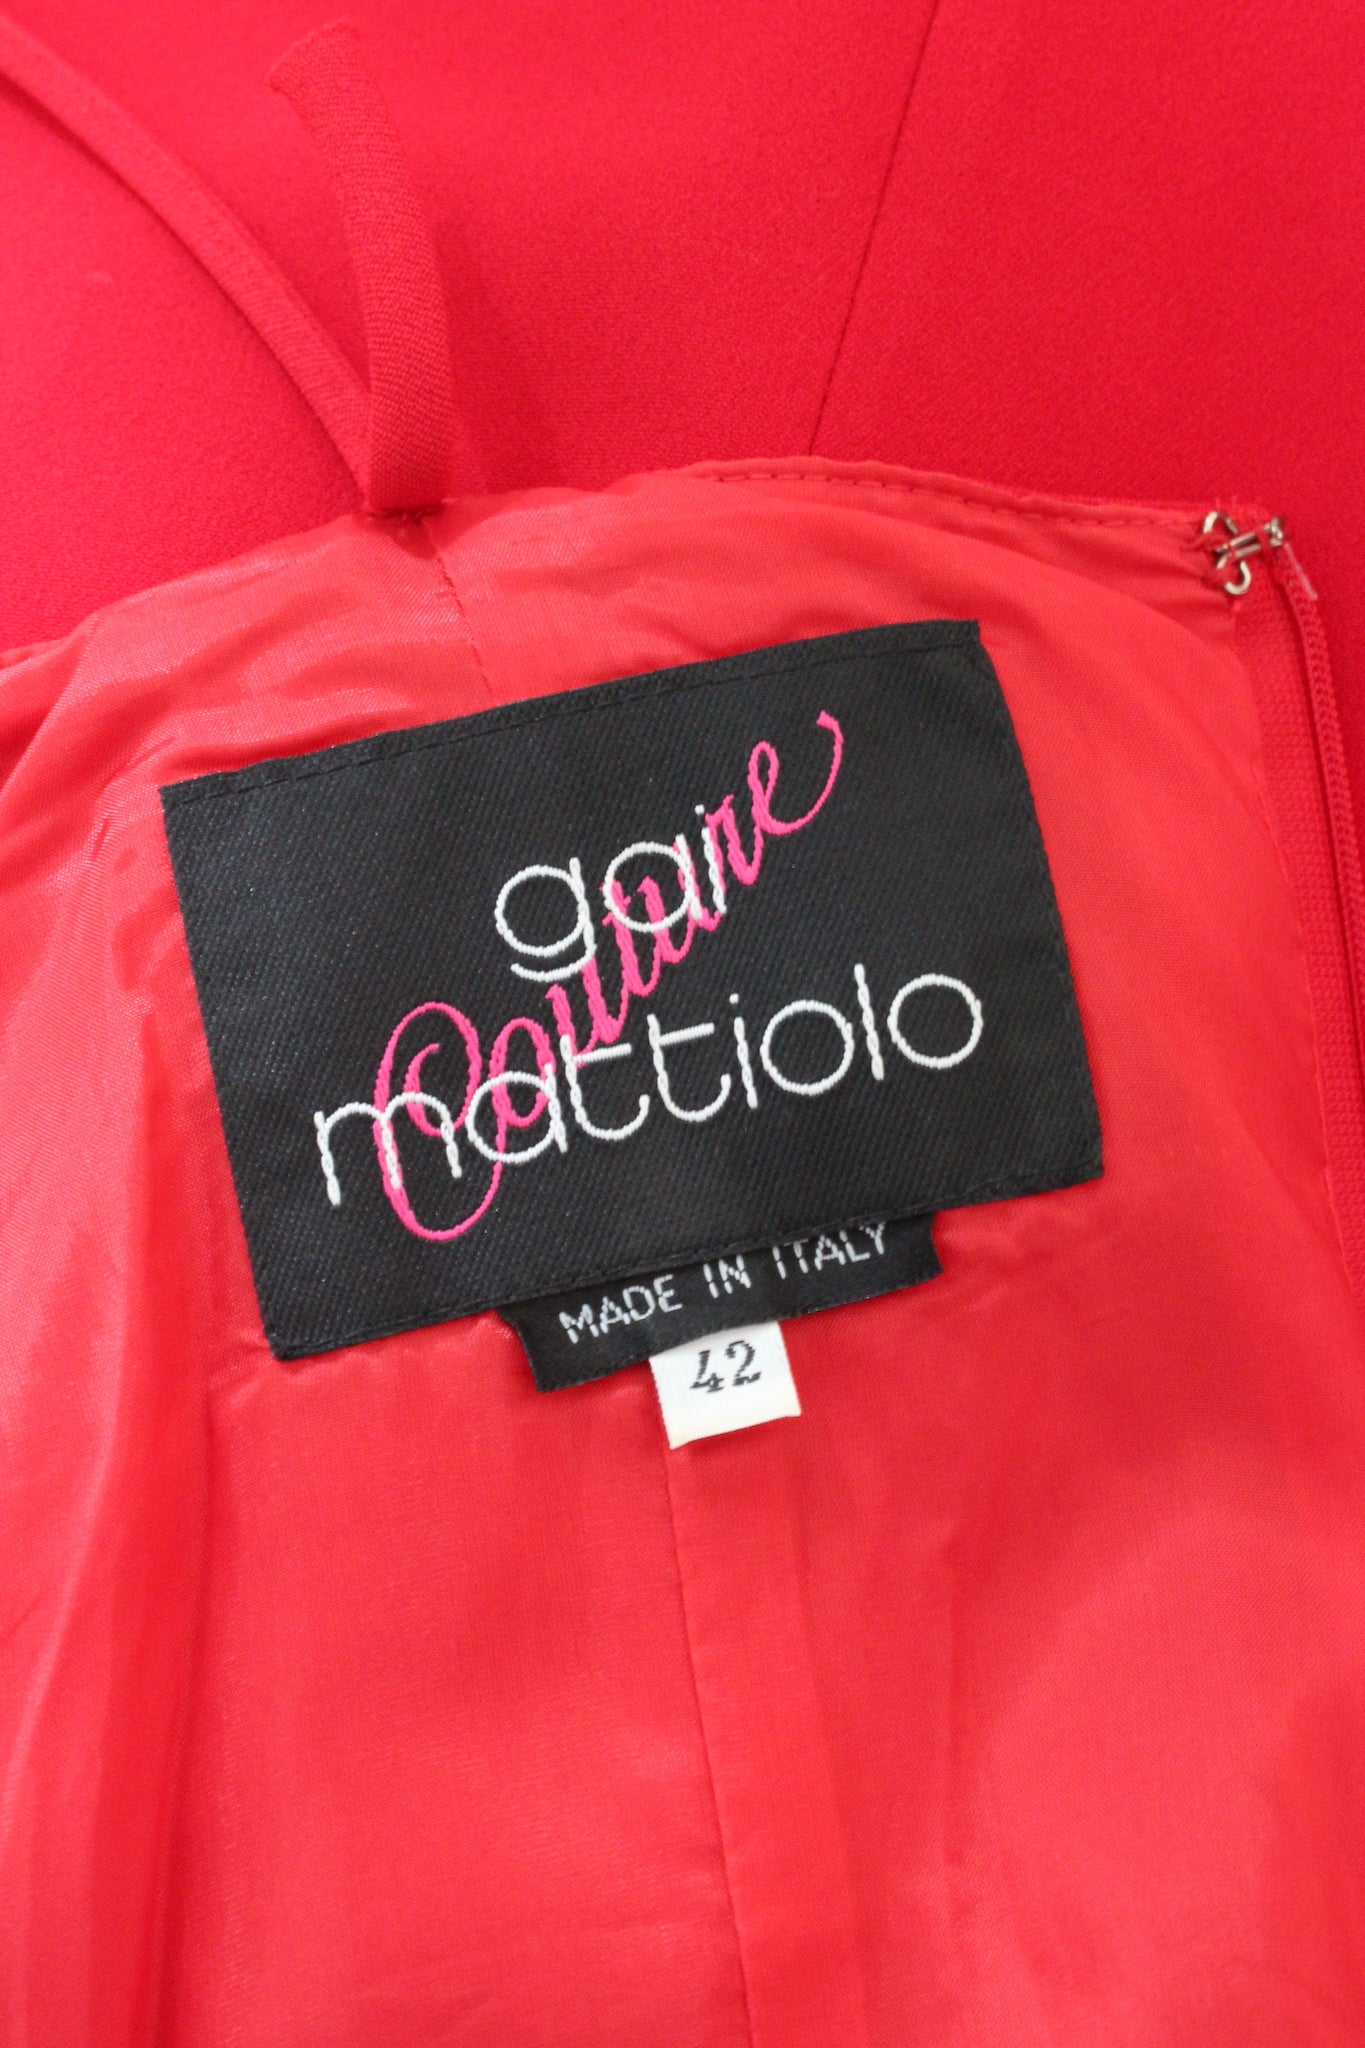 Gai Mattiolo Red Lace Vintage Evening Dress 2000s